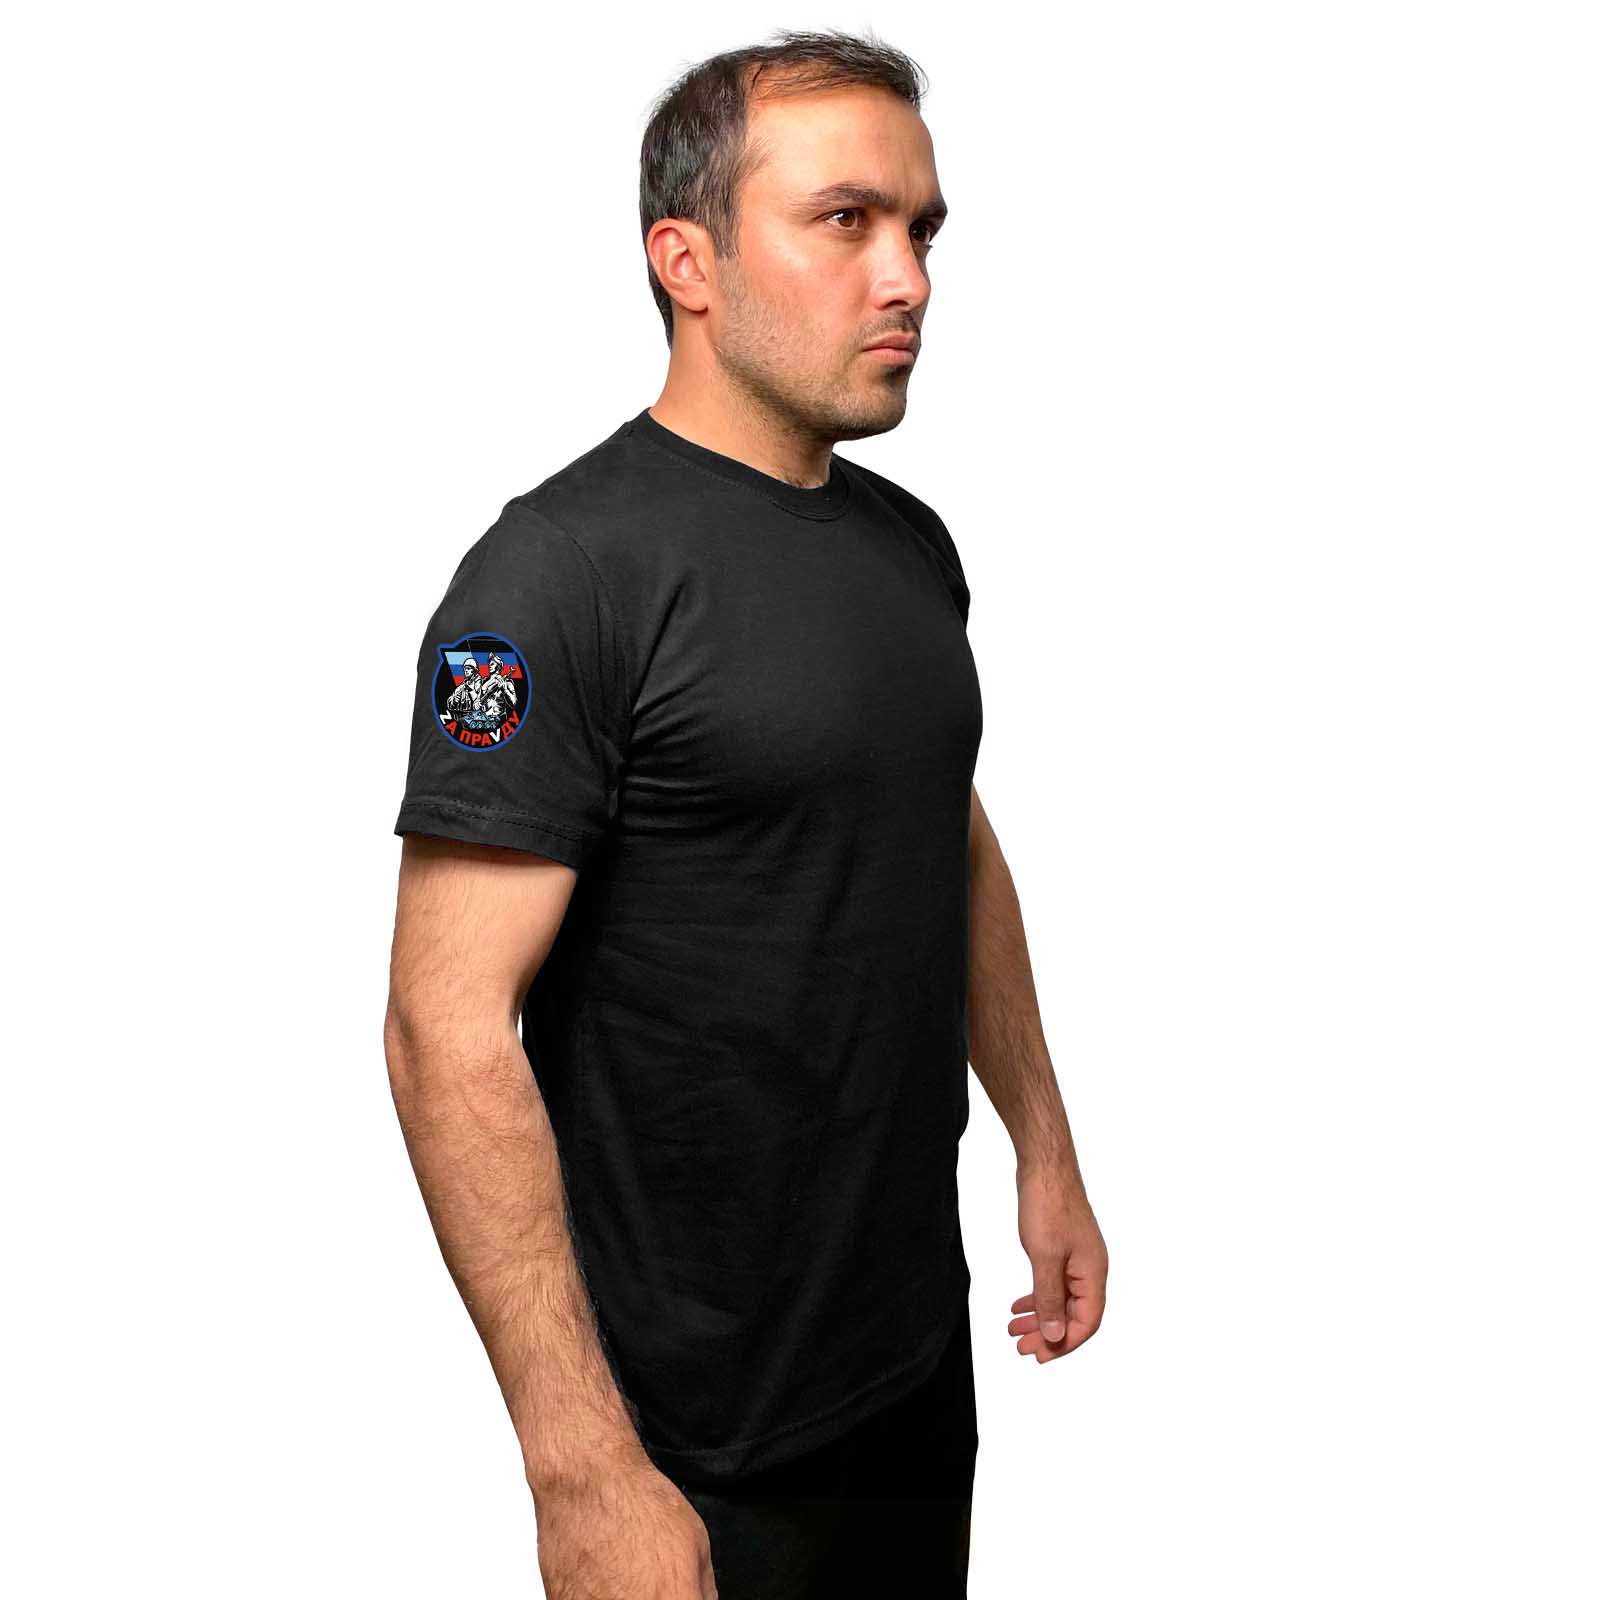 Чёрная футболка с термопринтом "Zа праVду" на рукаве